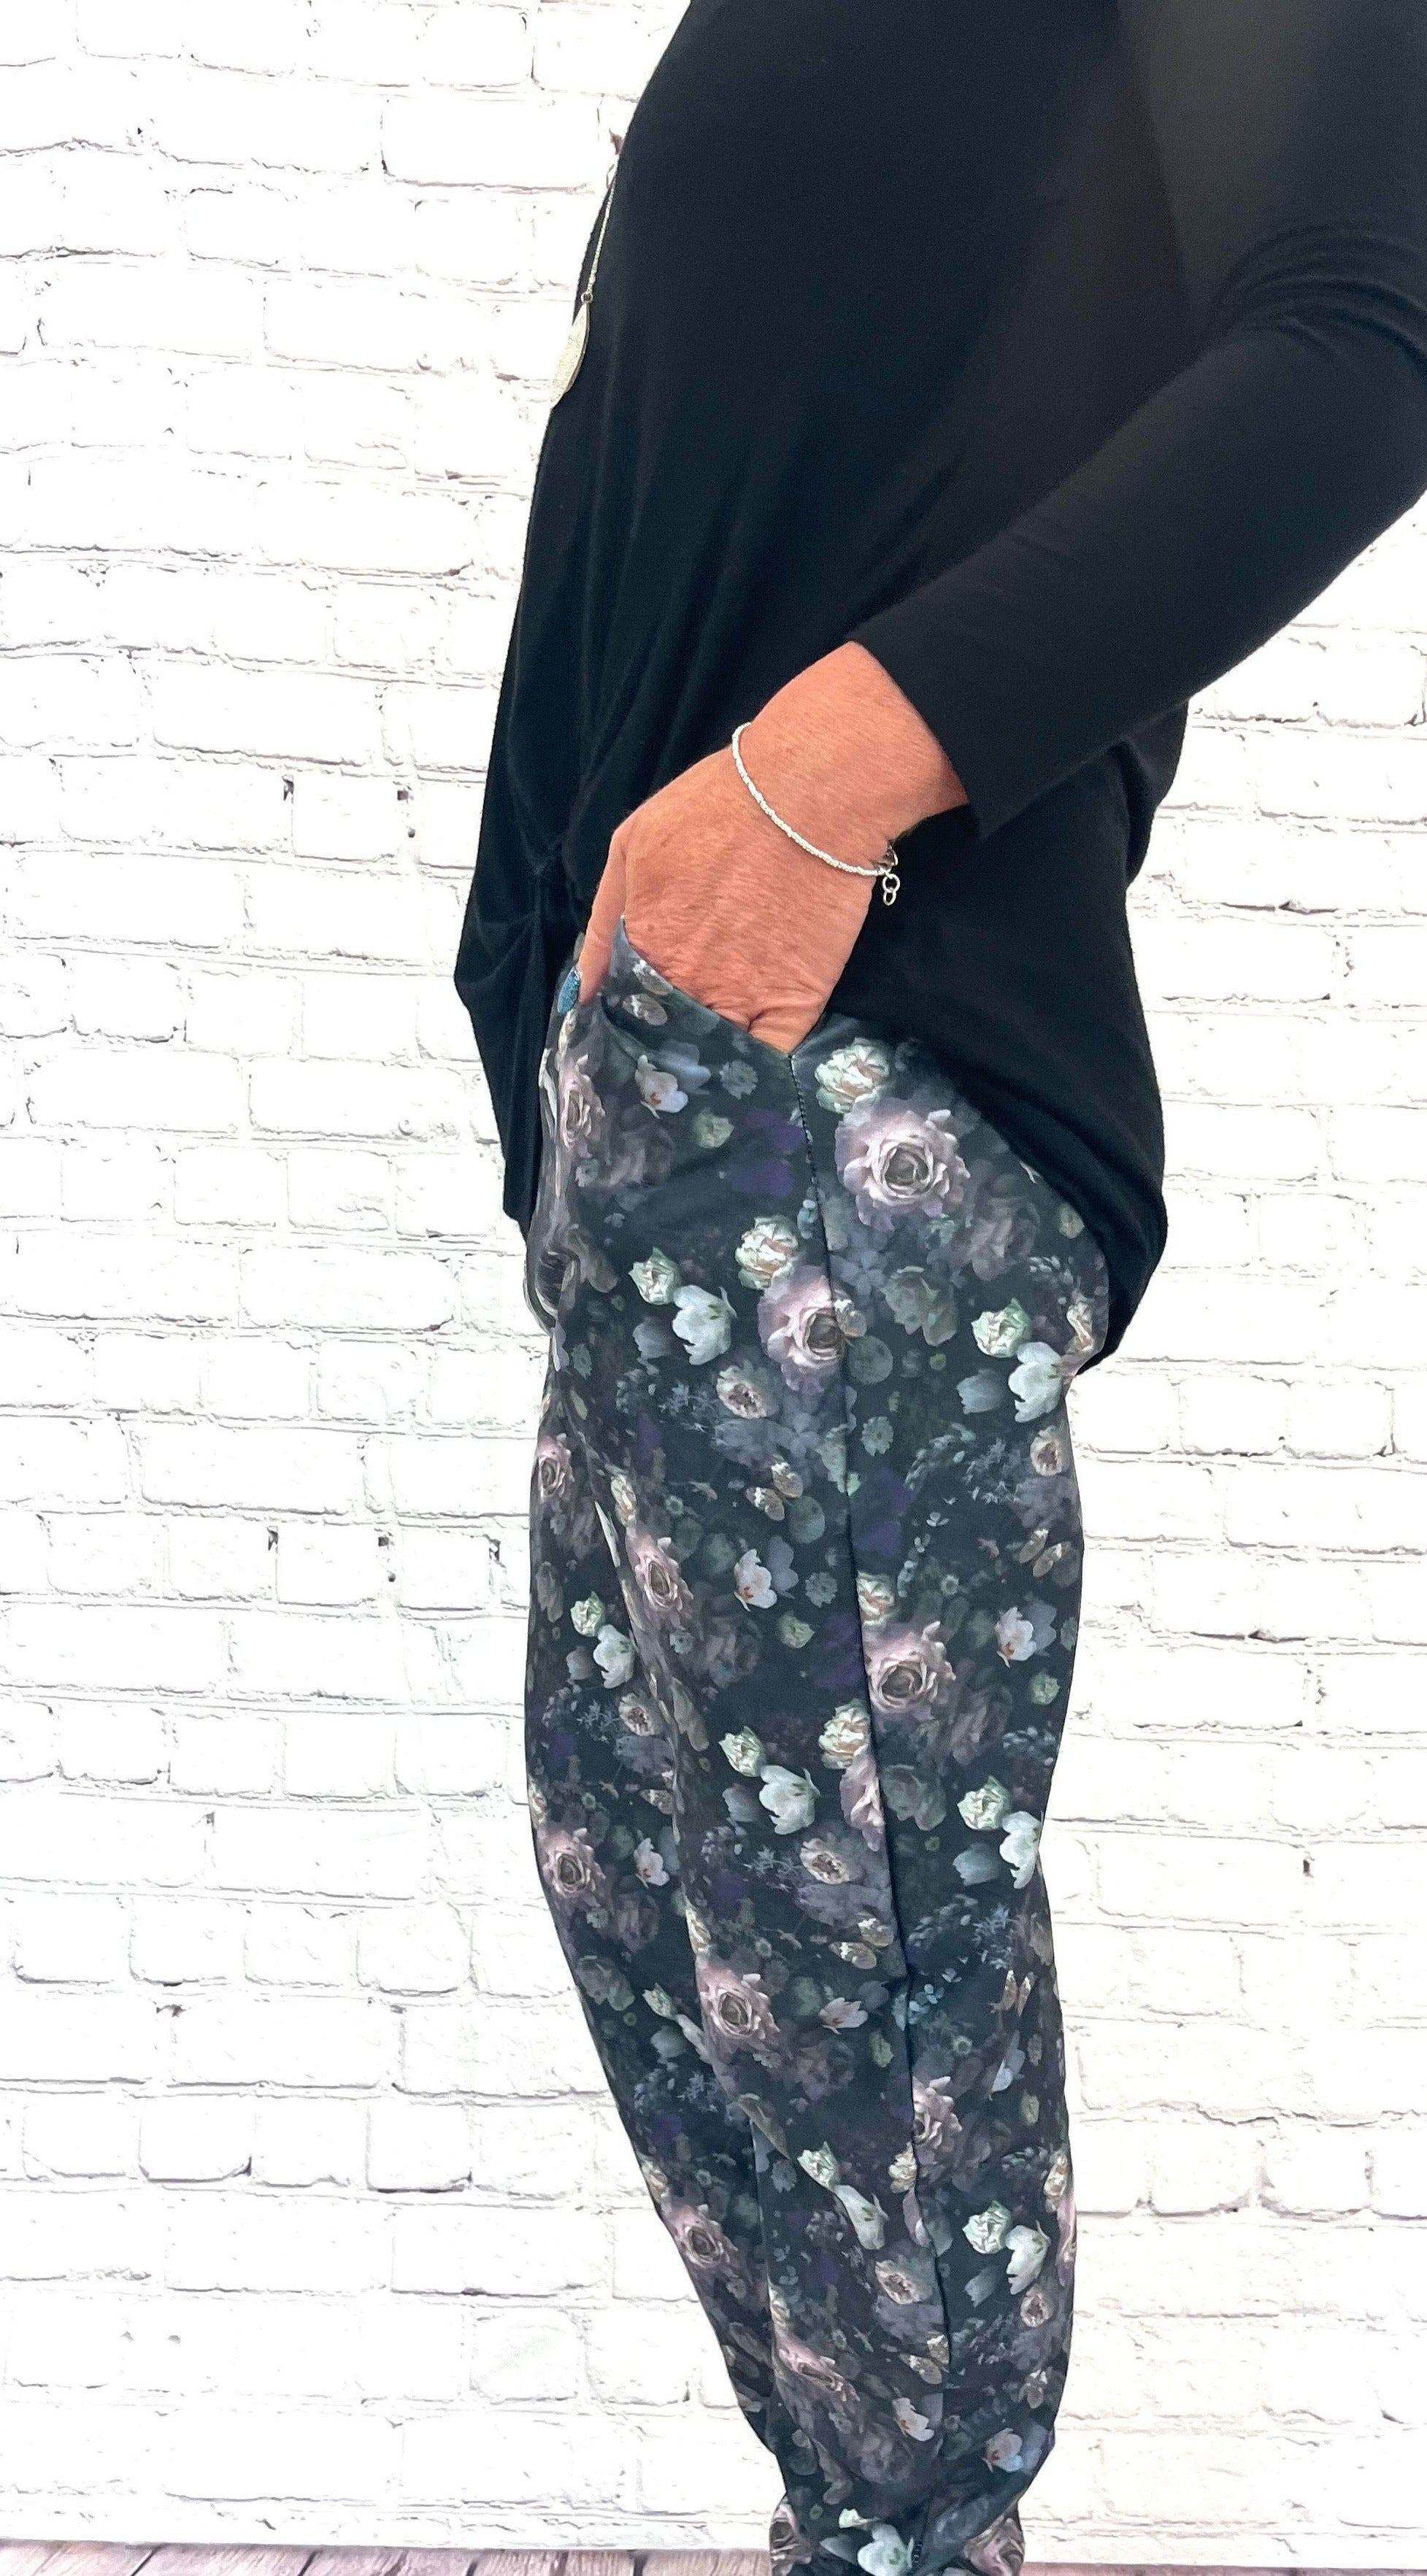 Woman wearing black floral jogging pants